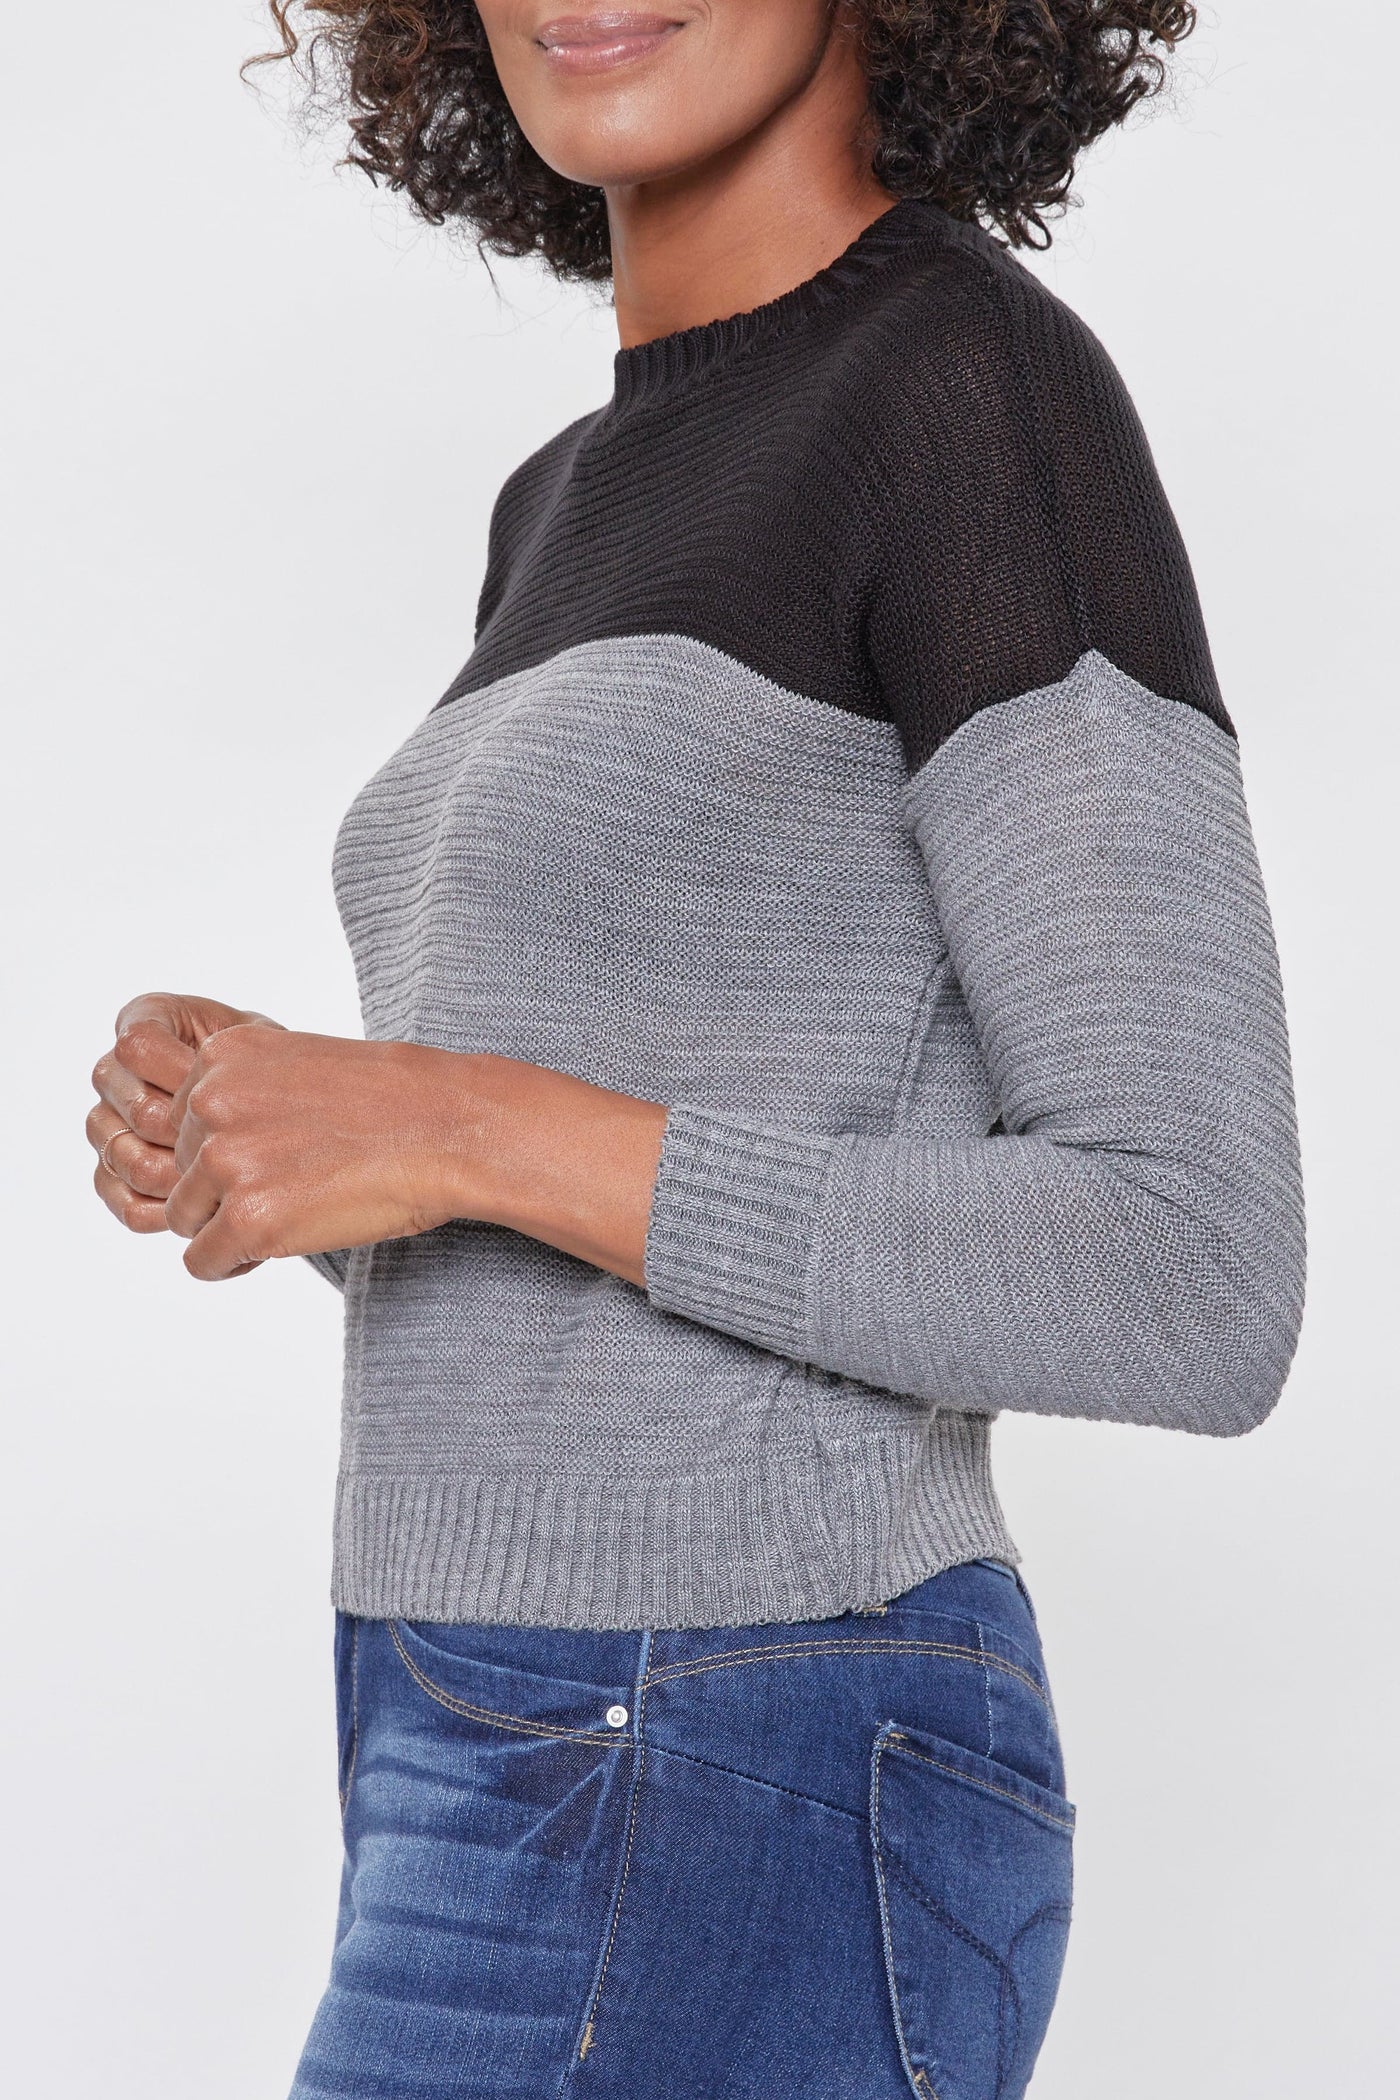 Women's Color Block Long Sleeve Knit Sweater Deal-Sale